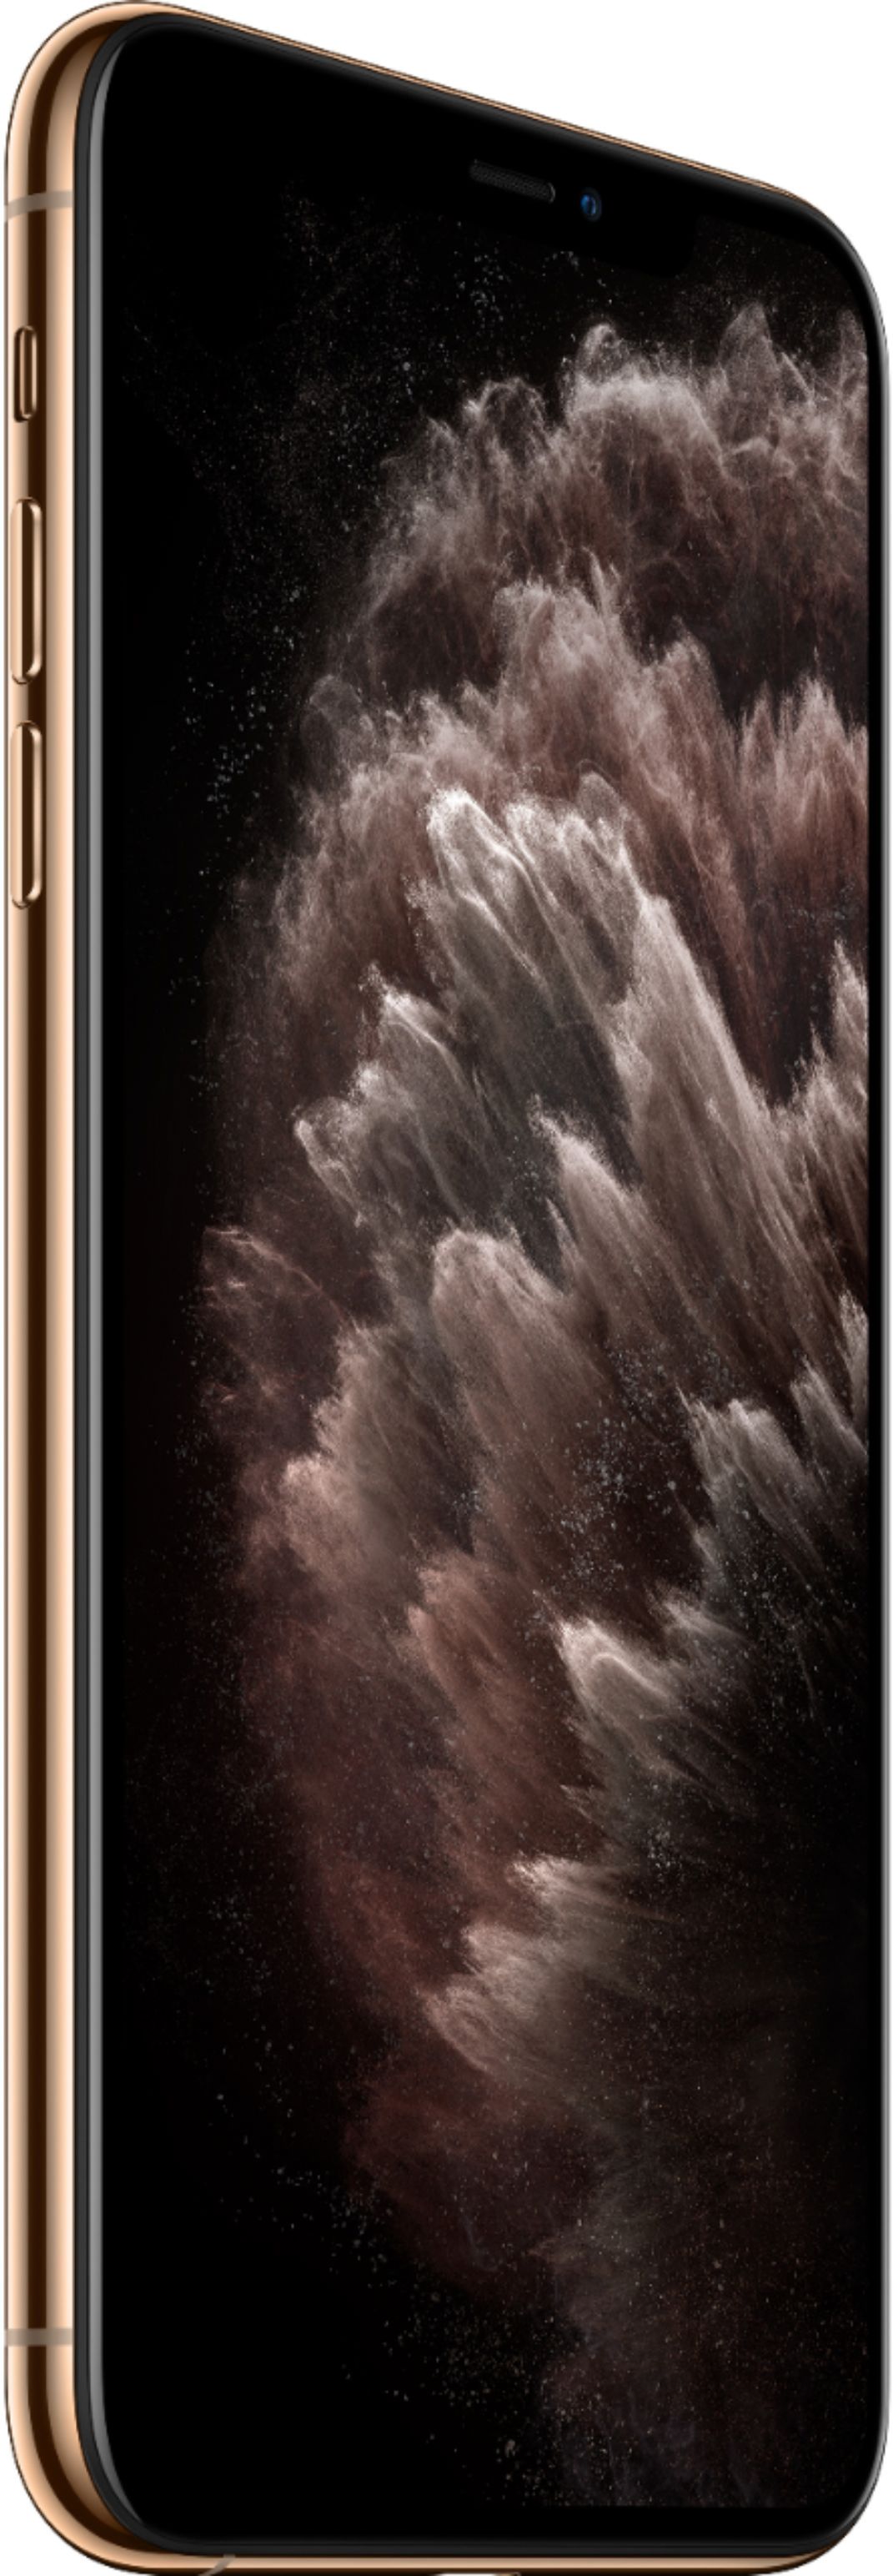 Best Buy: Apple iPhone 11 Pro Max 64GB Gold (Verizon) MWH12LL/A